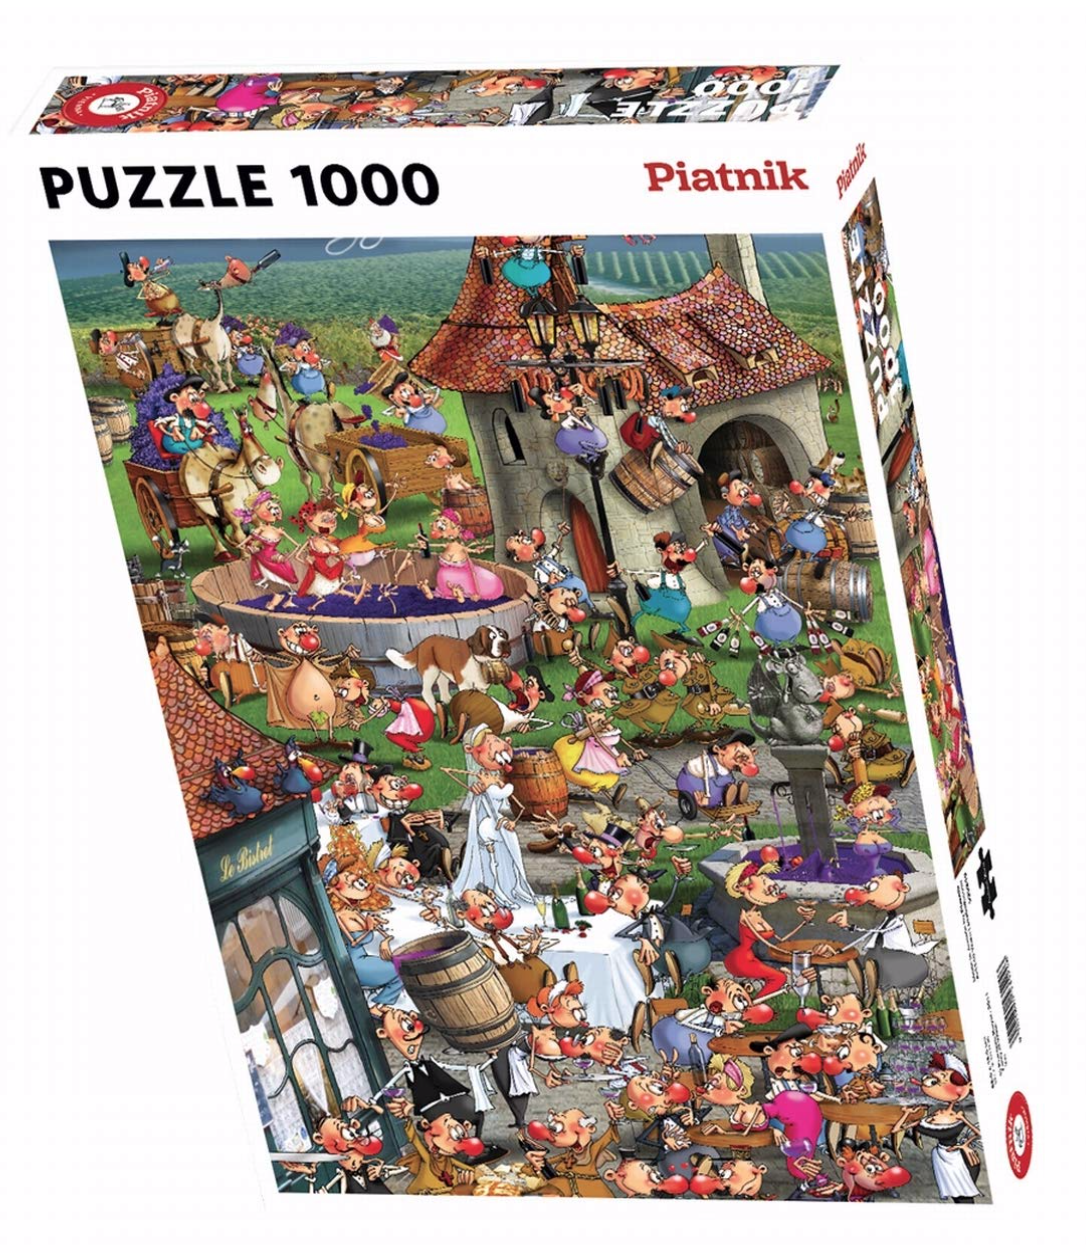 Noodlottig einde mosterd Buying cheap Piatnik Puzzles? Wide choice! - Puzzles123